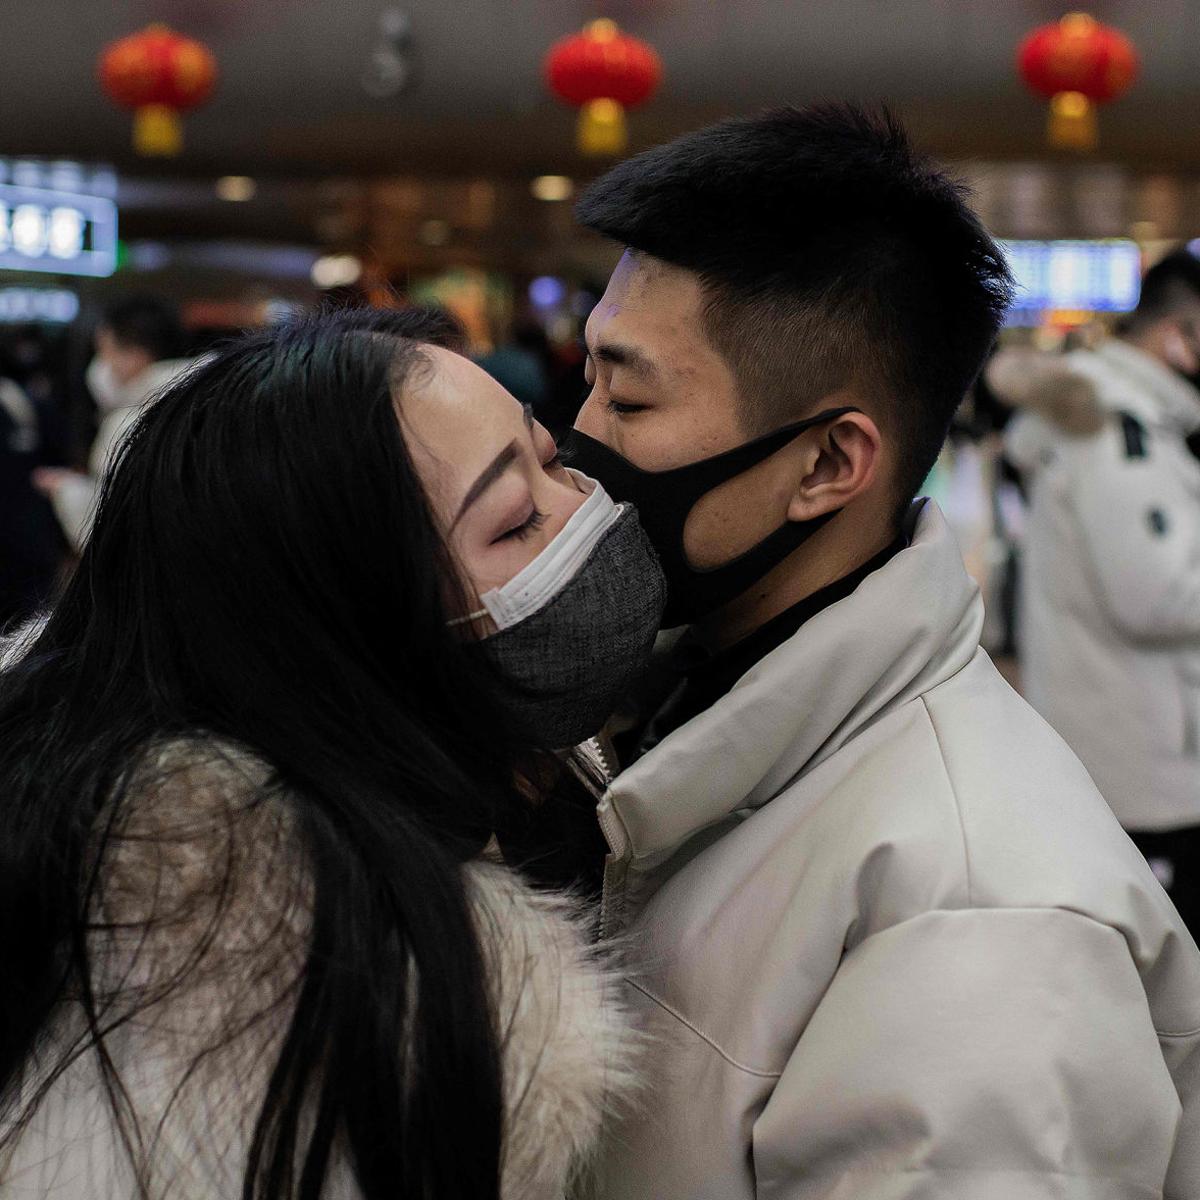 couple with coronavirus masks